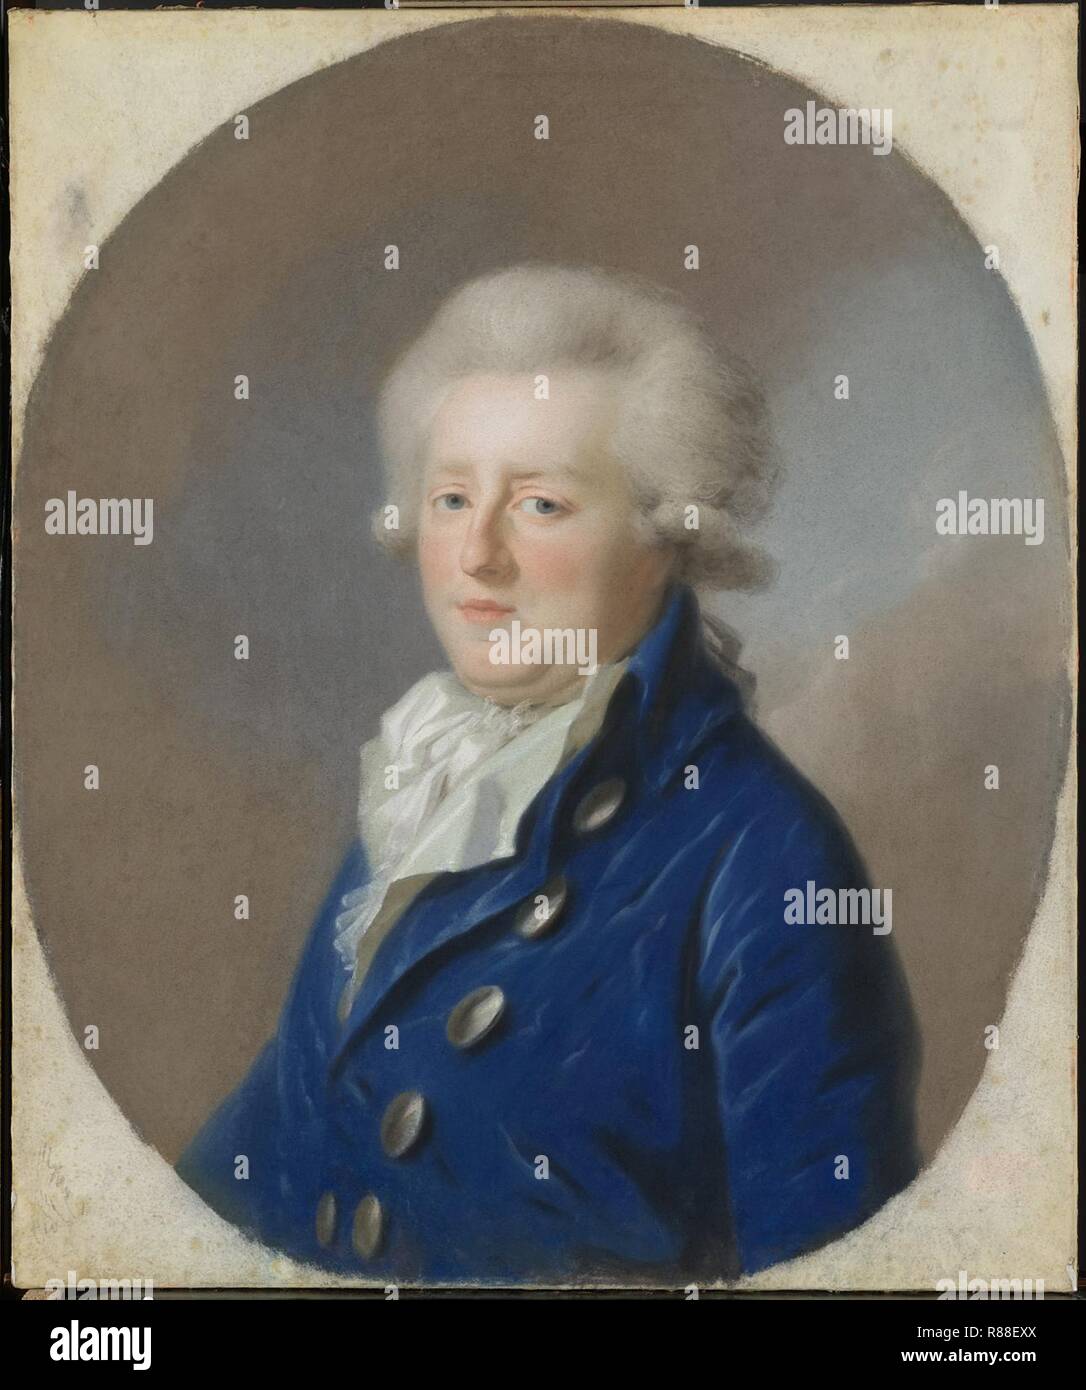 Carel Georg Agosto (1766-1807), erfprins van Braunschweig-Wolfenbüttel. Echtgenoot van Frederica Louisa Wilhelmina (Louise), prinses van Oranje-Nassau Foto Stock